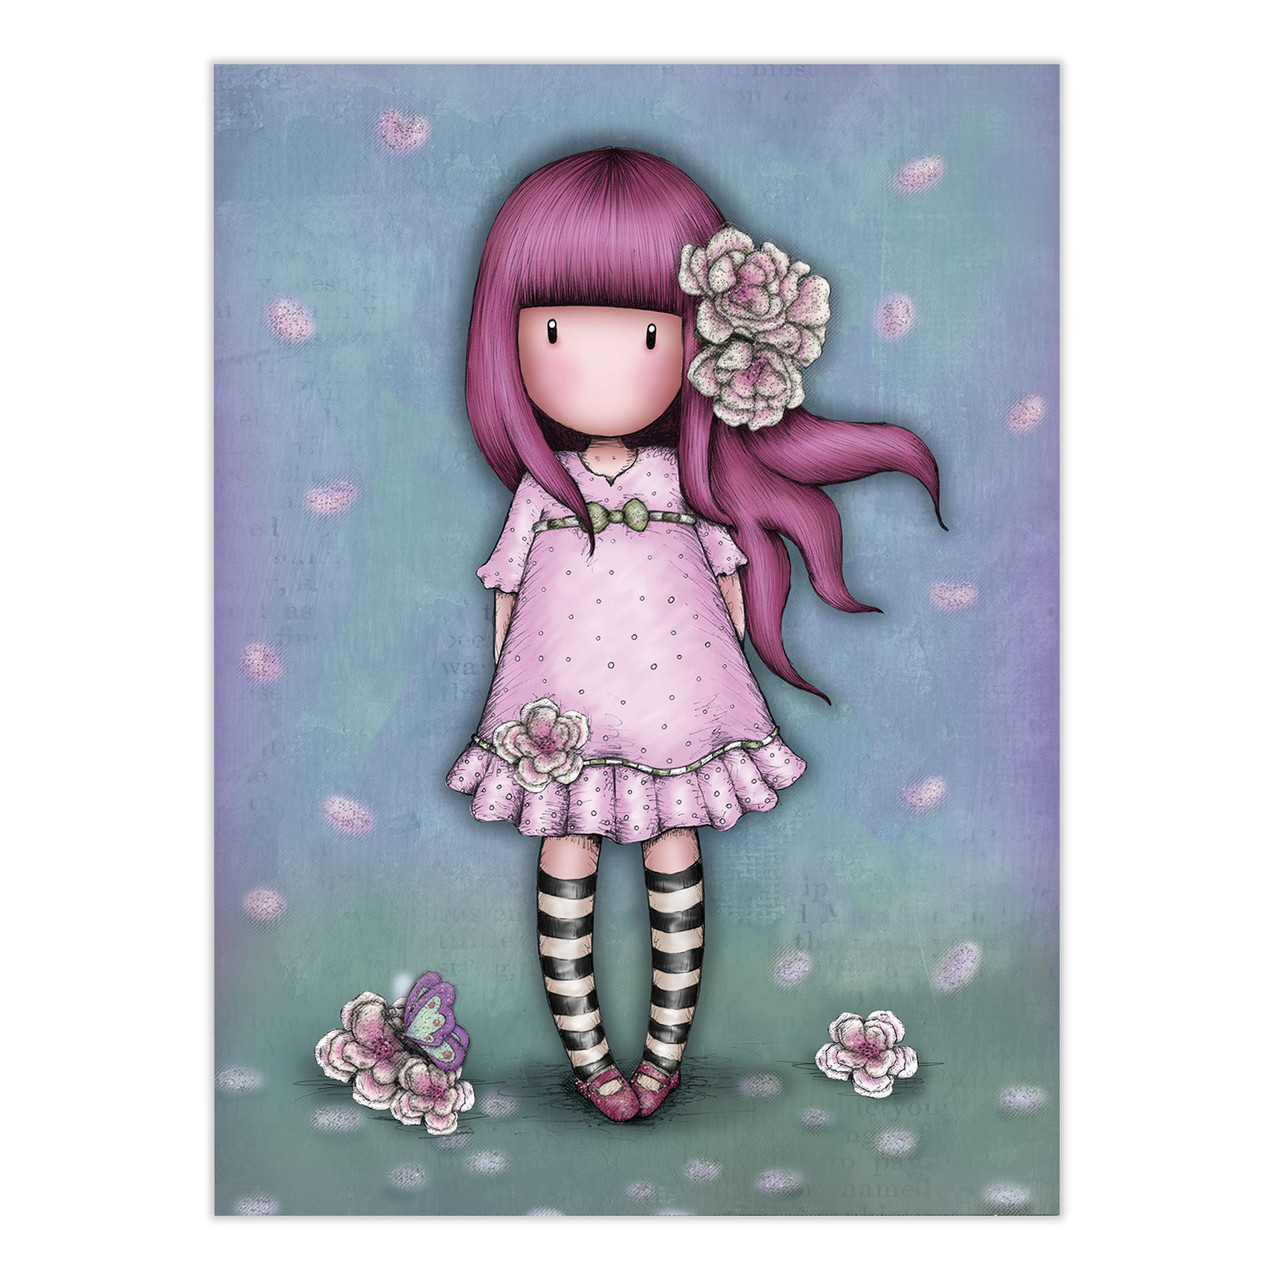 Gorjuss Greeting Card - Cherry Blossom - For Her, Kids, Friends